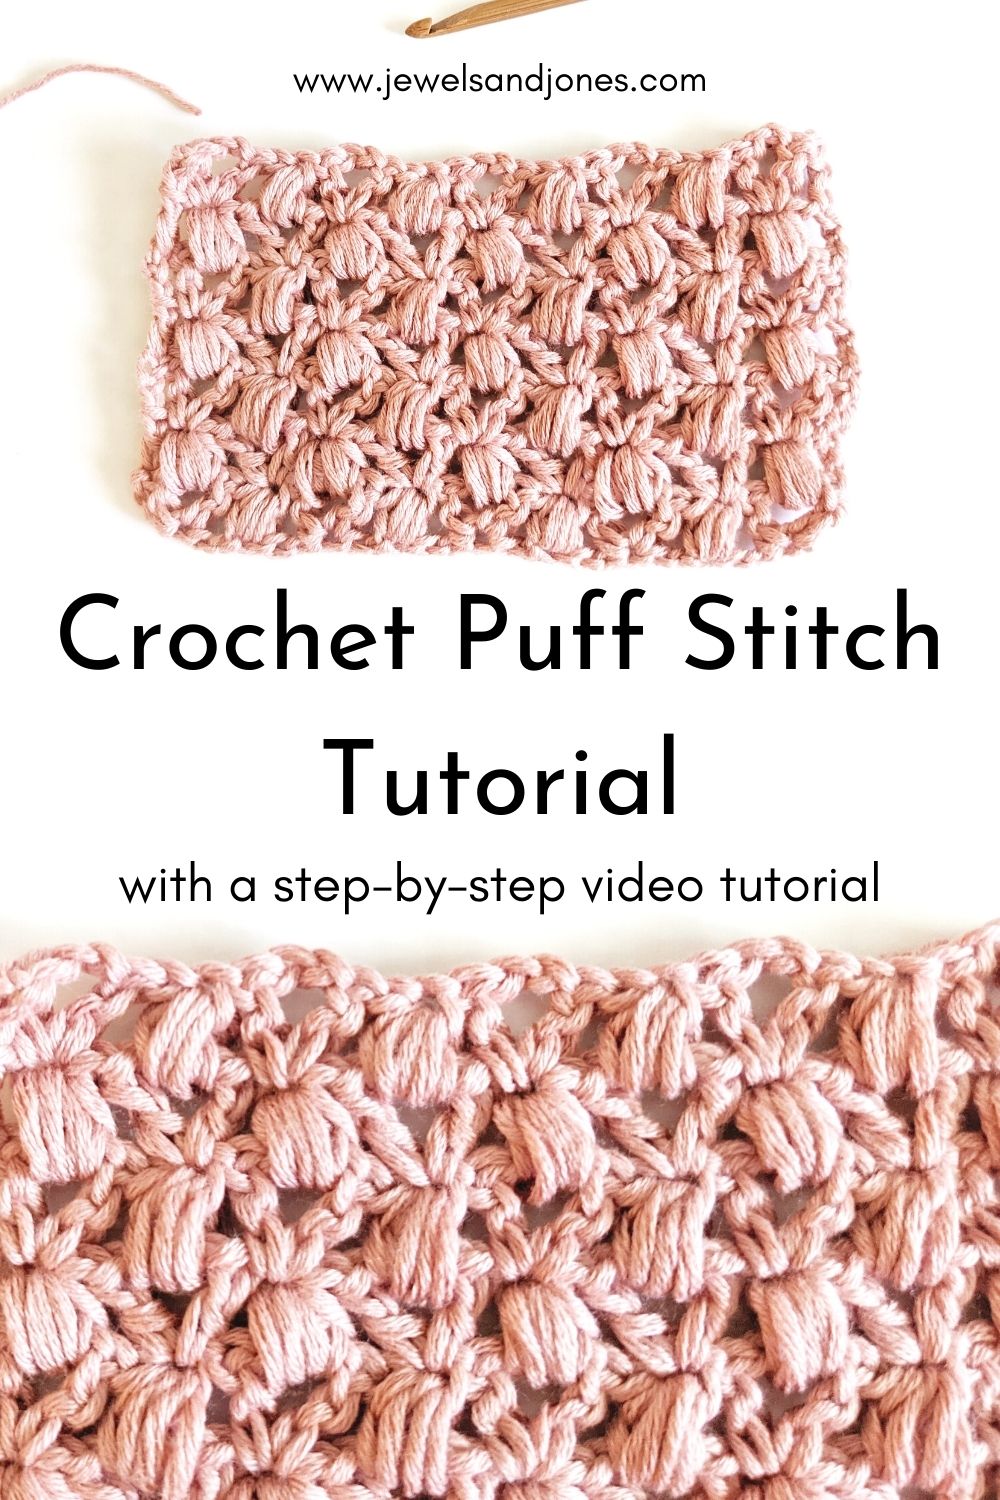 Crochet Puff Stitch Tutorial 